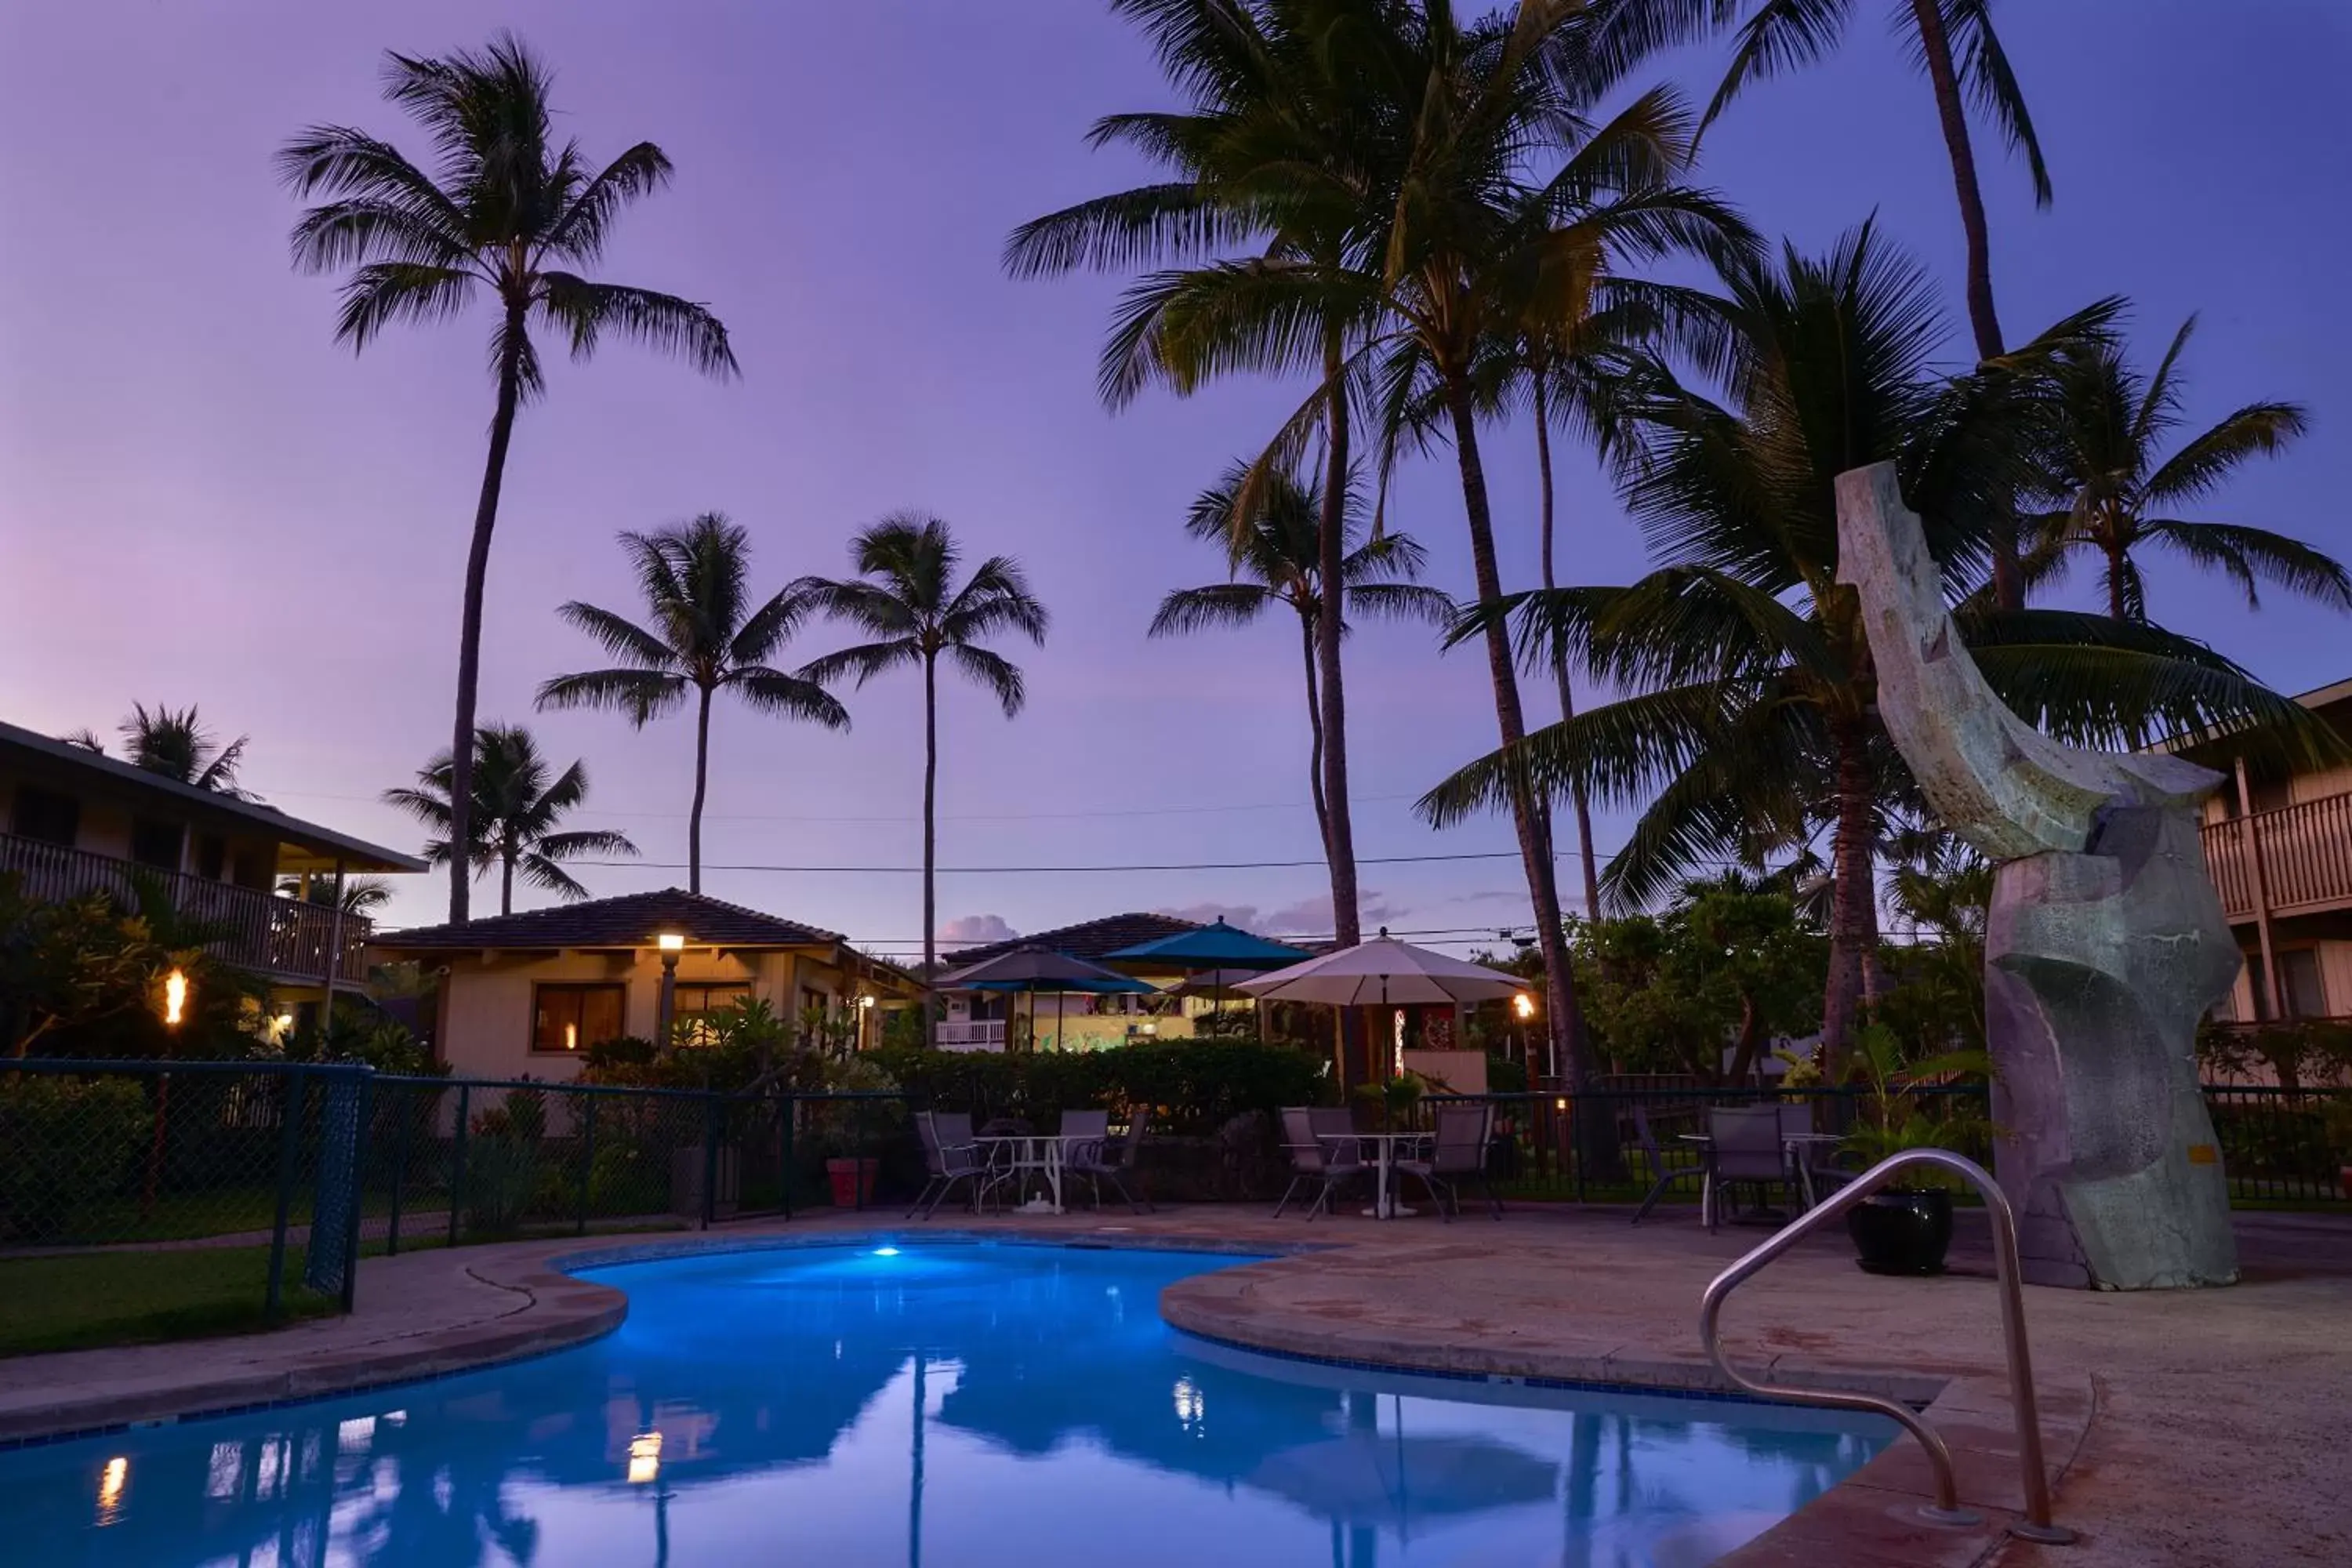 Swimming Pool in The Kauai Inn